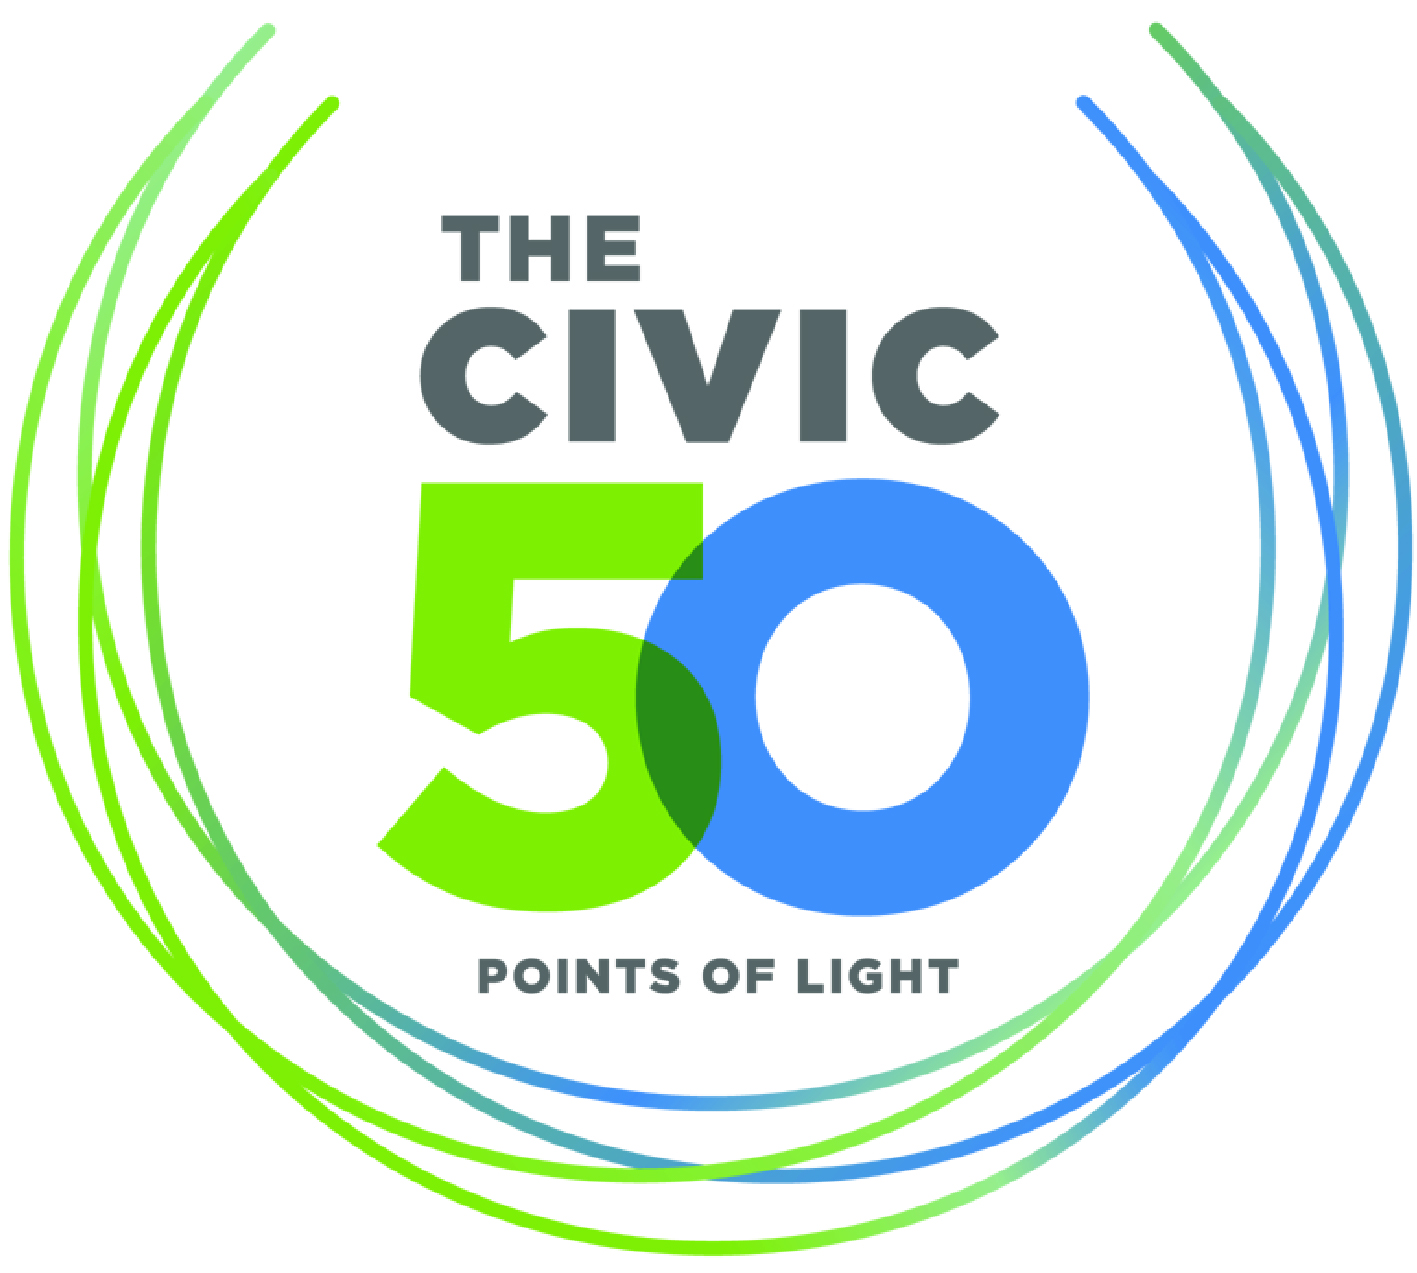 pgxx_logo-civic 50points.jpg